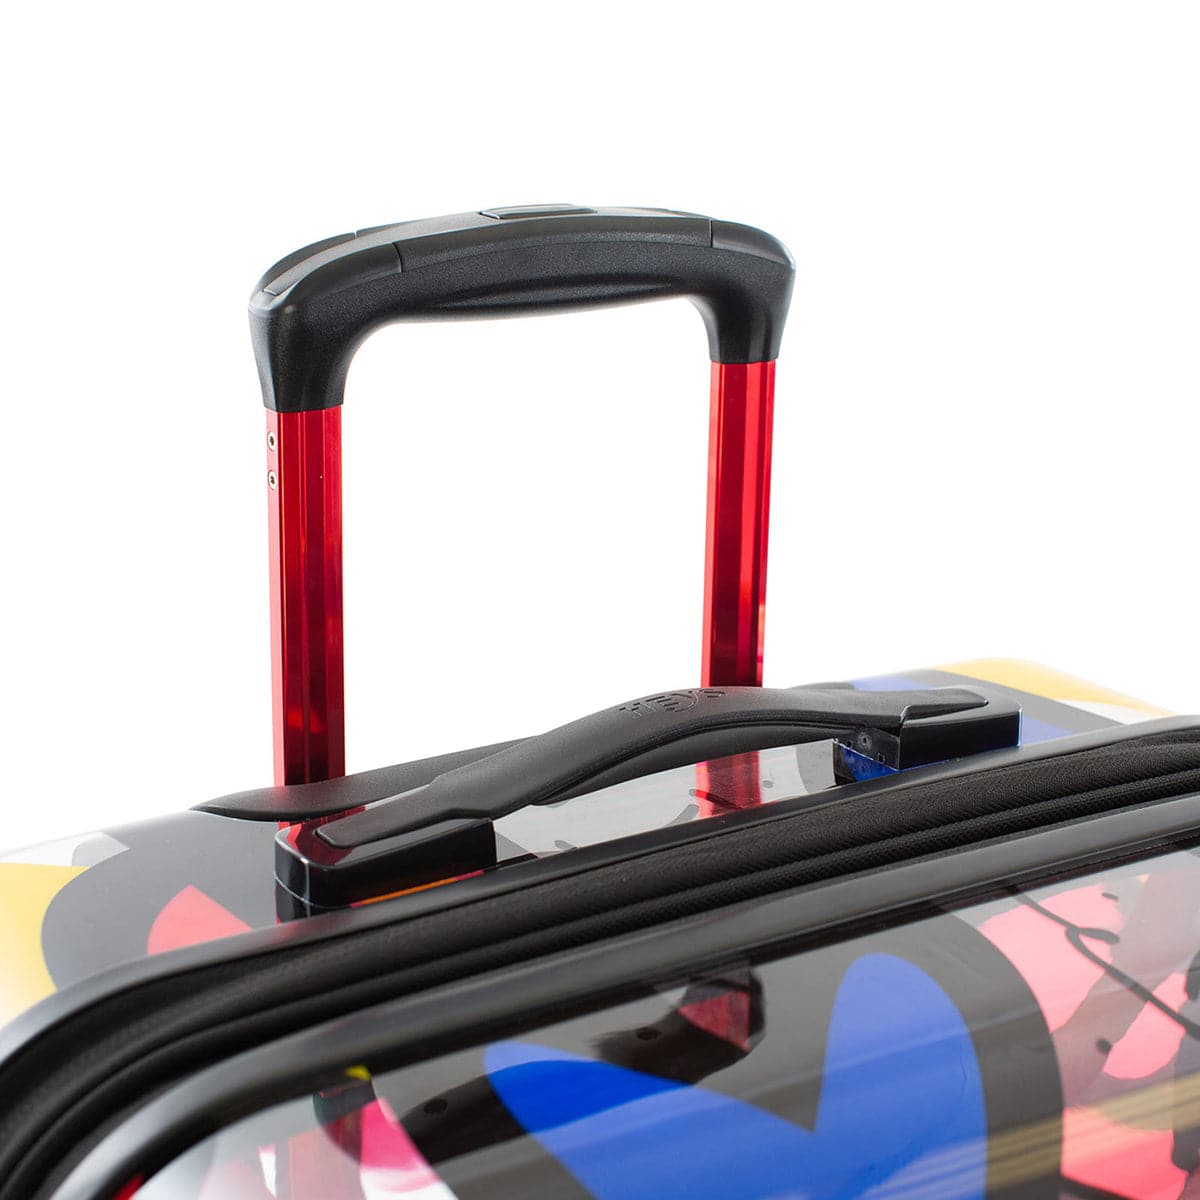 Heys Britto 26" Transparent The Art of Modern Travel Luggage